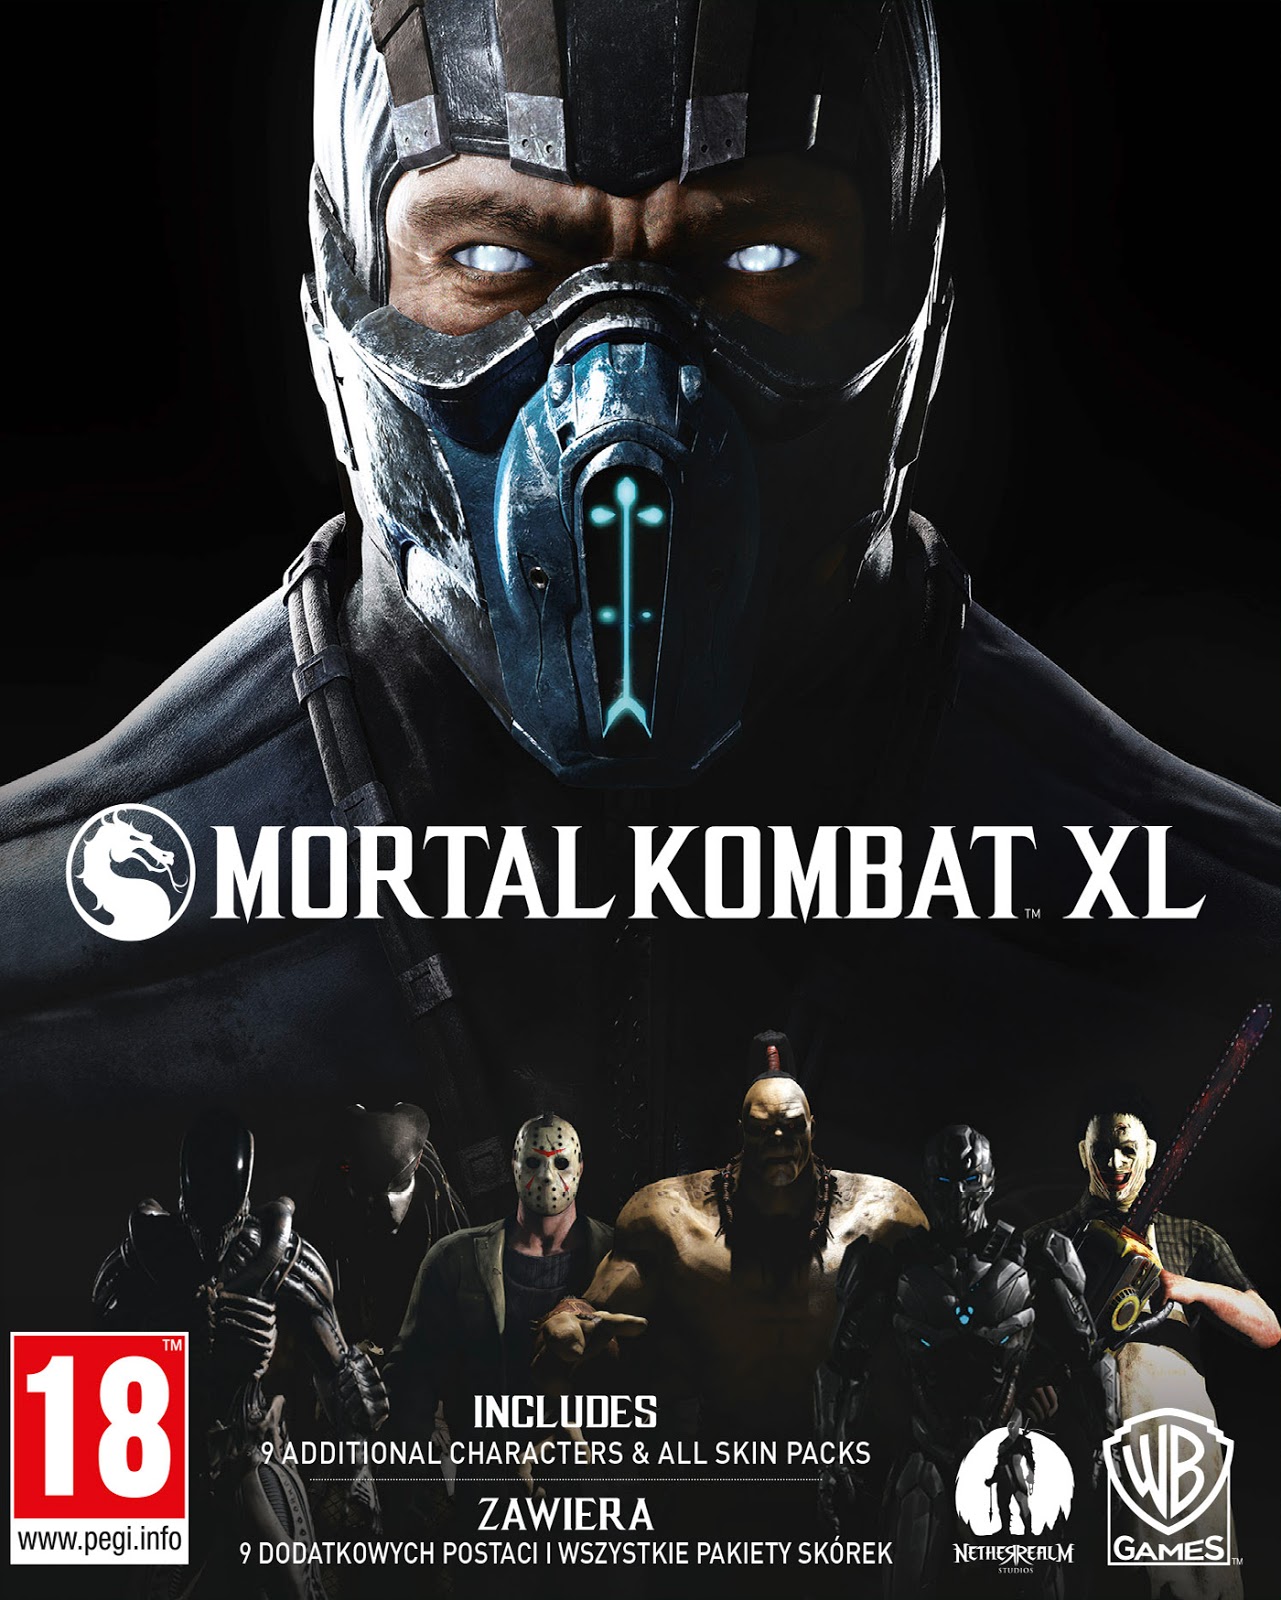 Mortal Kombat Xl Free Download Mac